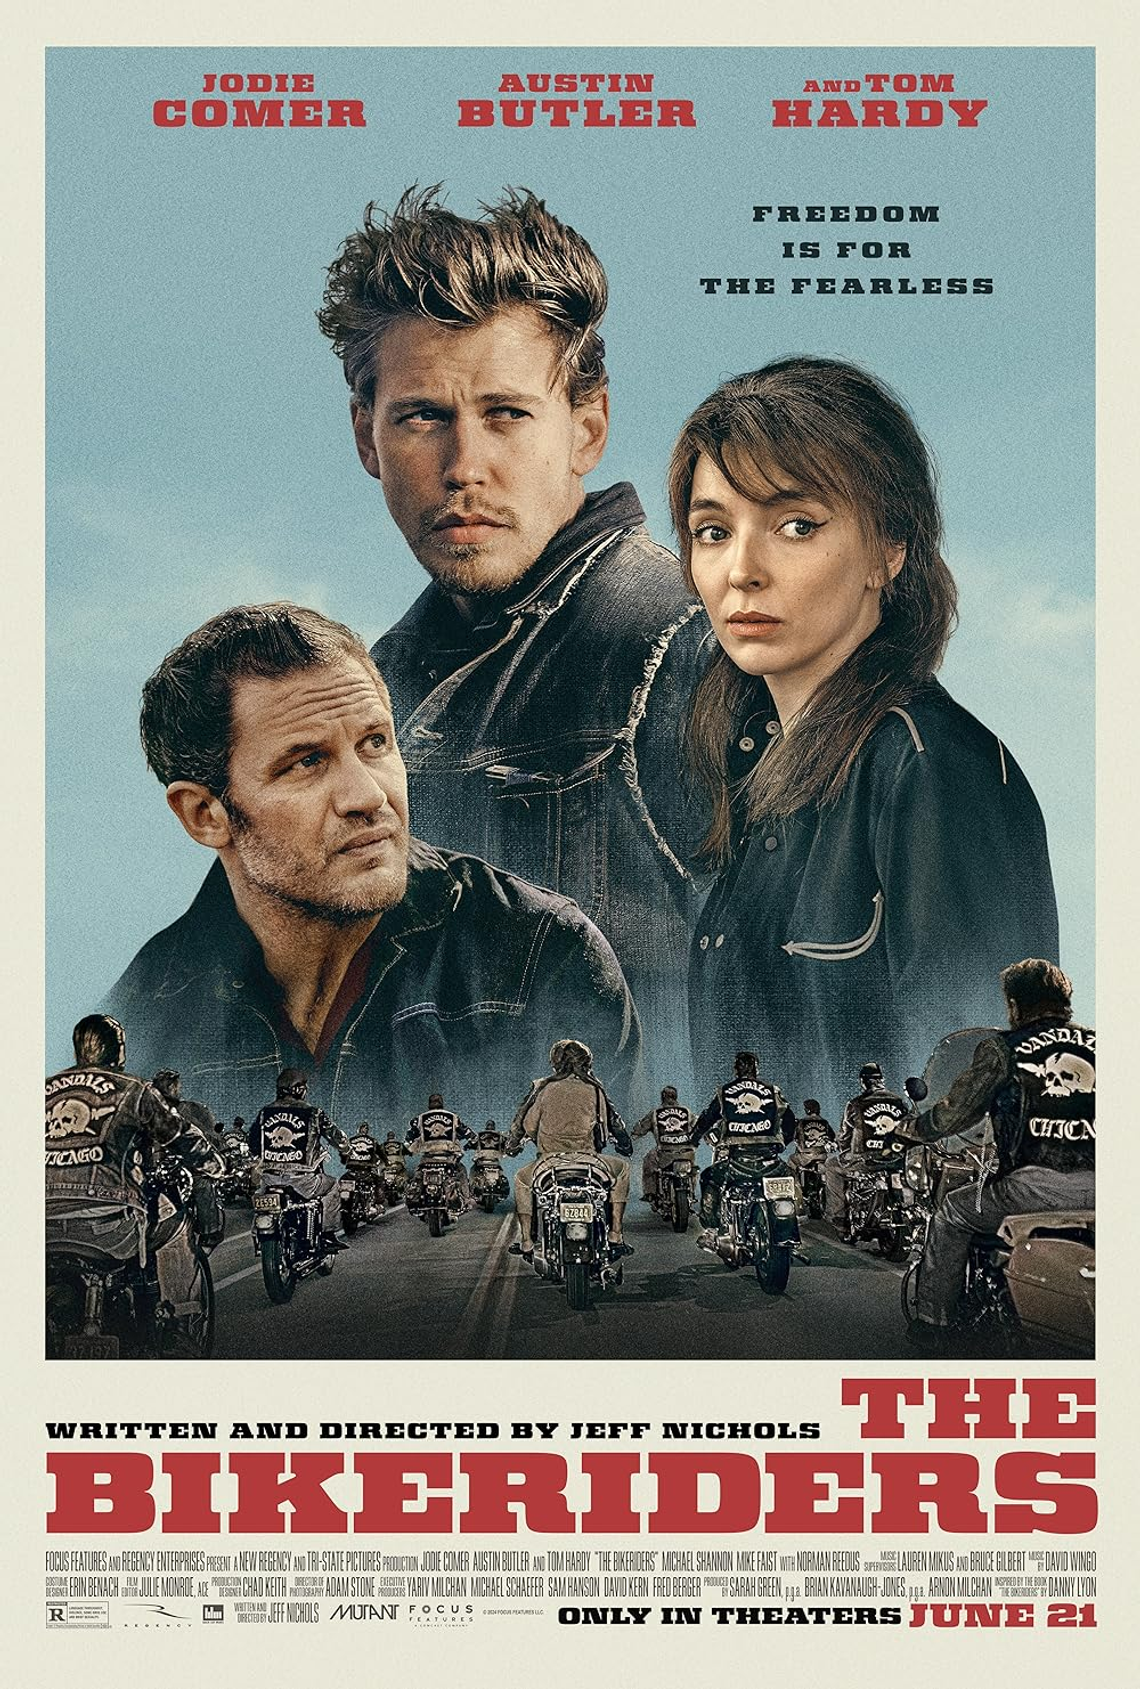 Movie Review: The Bikeriders